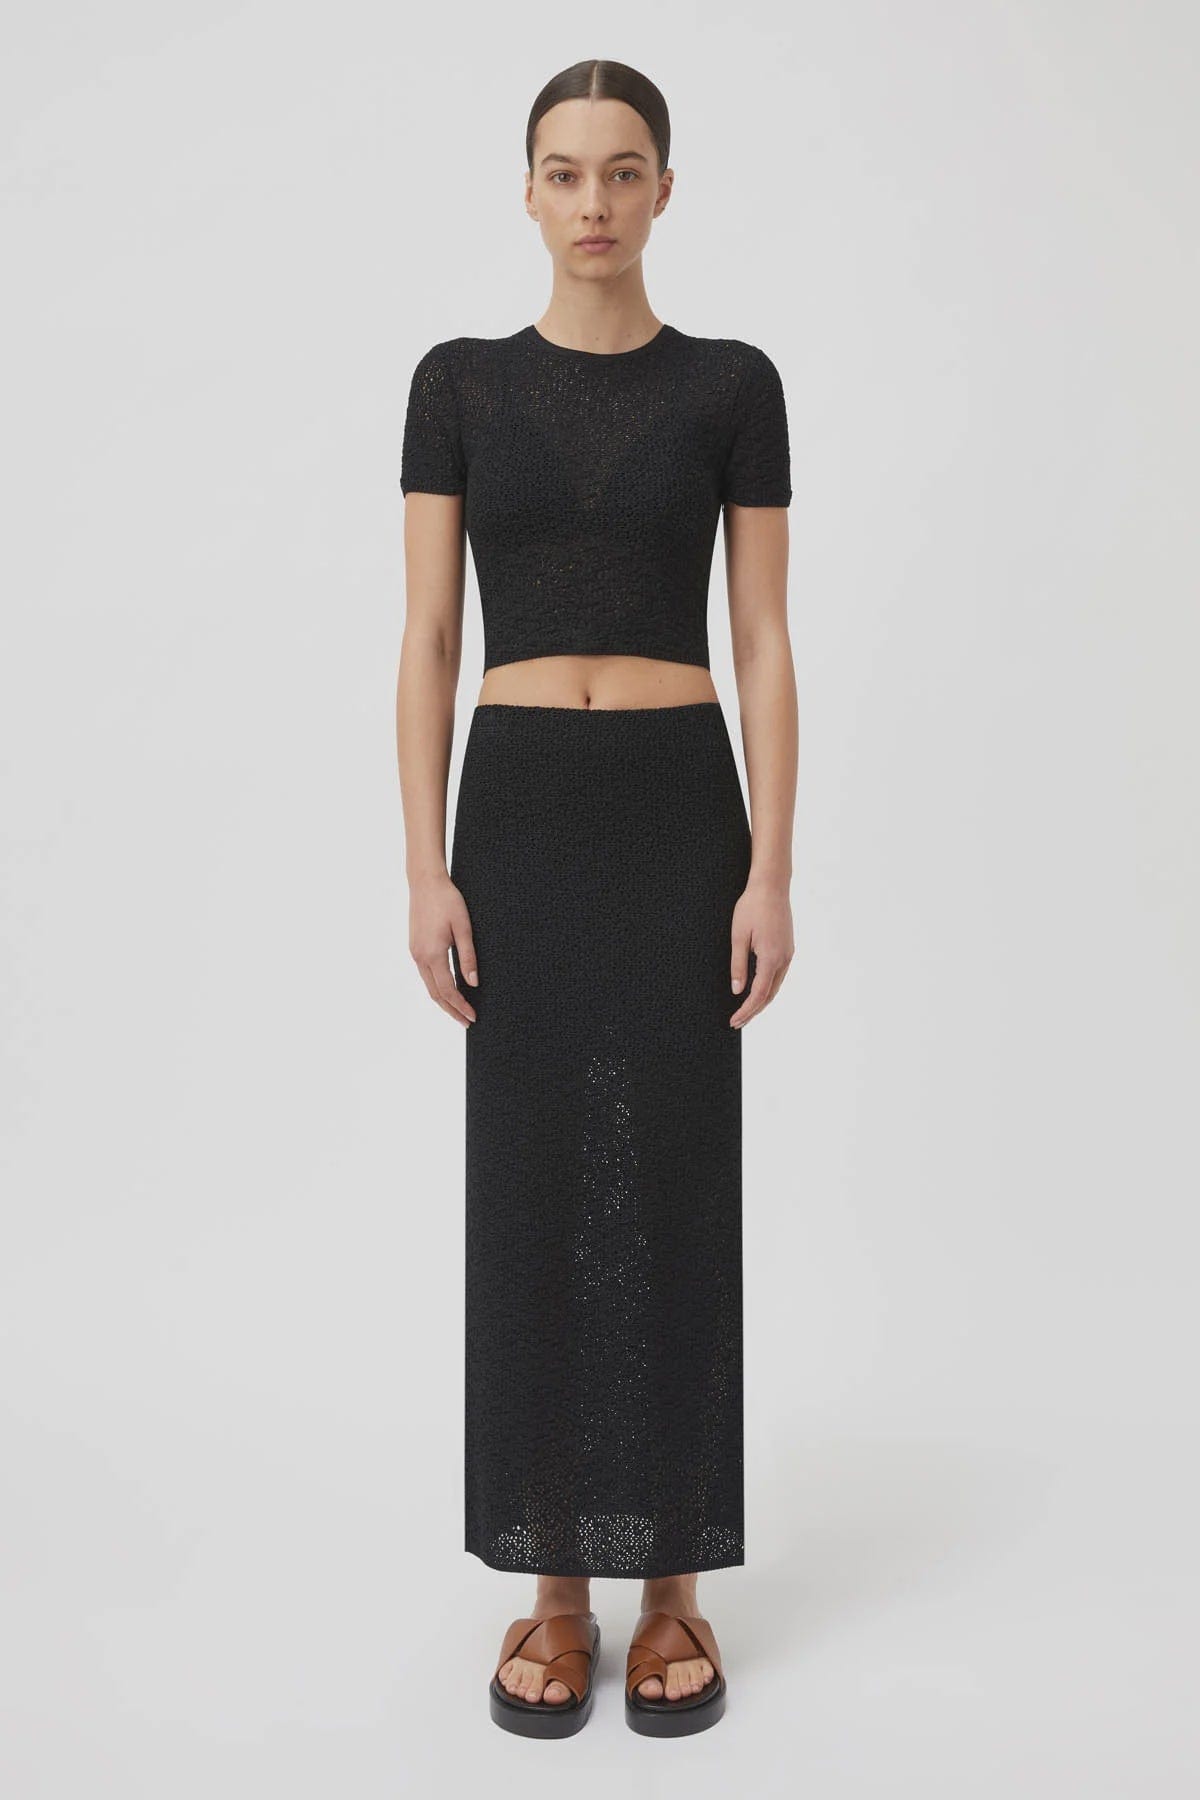 C&M Skirts - Casual C&M | Chara Knit Skirt - Black